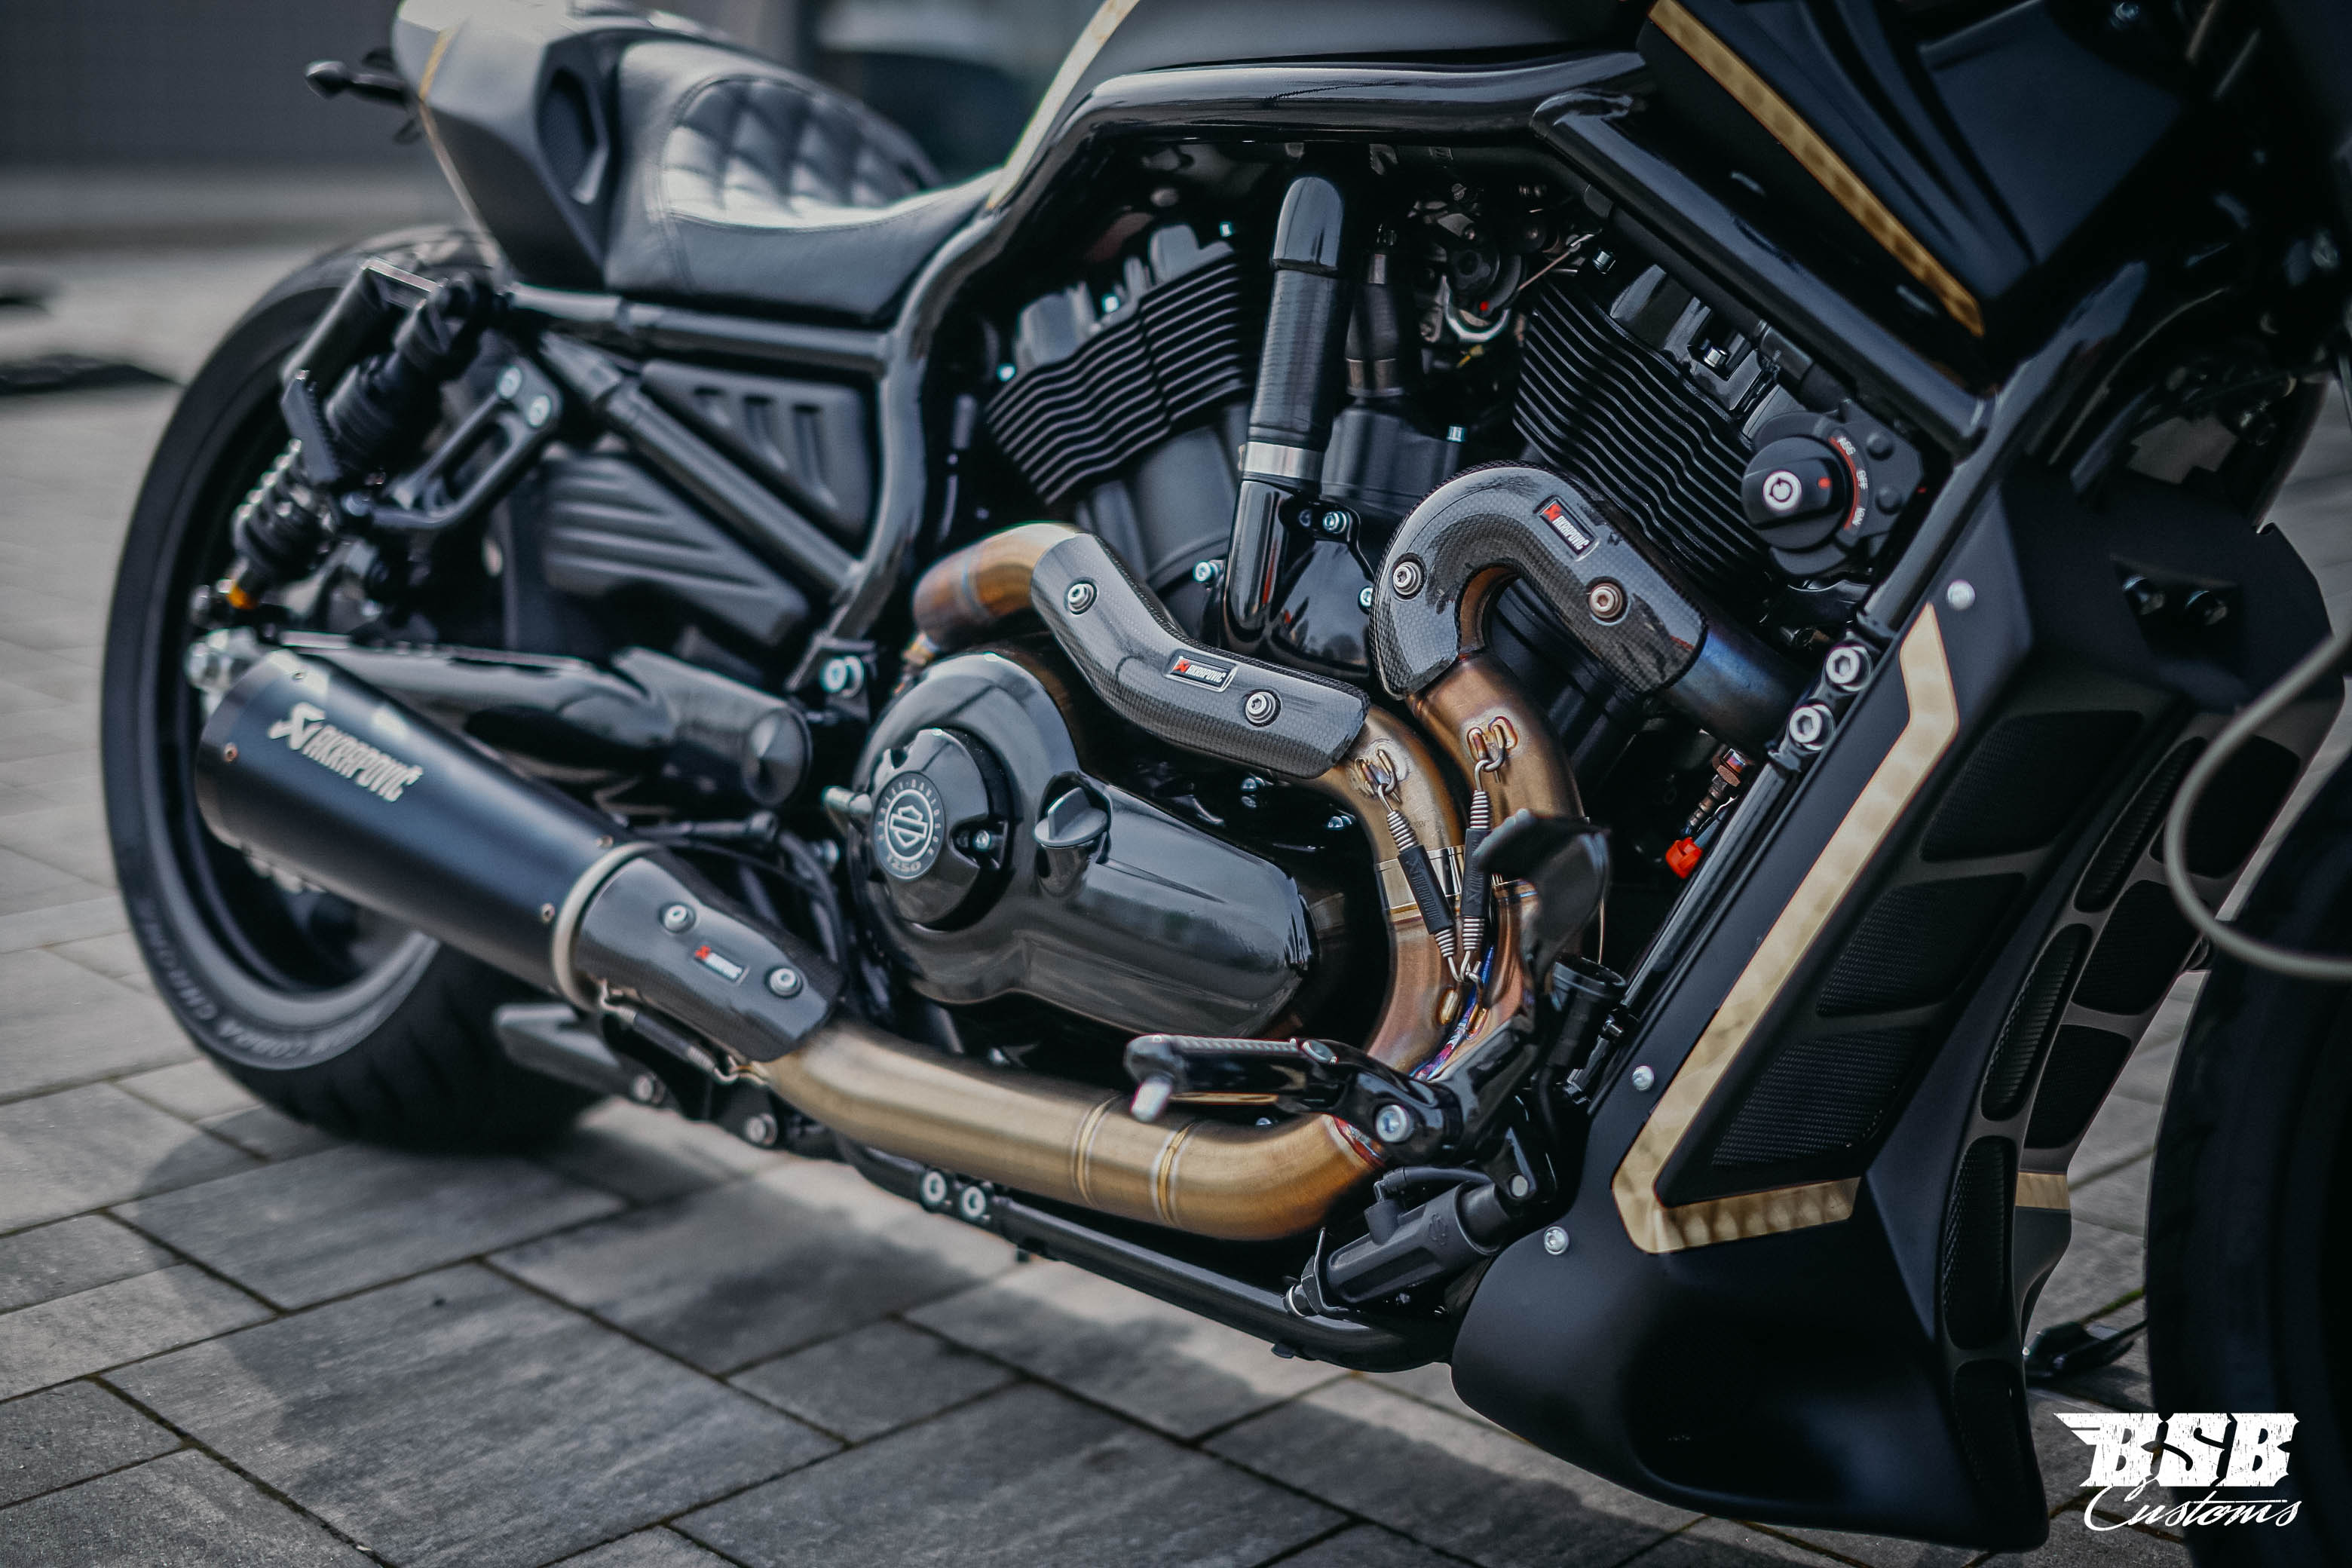 2016 Harley Davidson V-ROD VRSCF Muscle  ABS, edler Umbau 260-er Akrapovic KC Teile ... ab 300 EUR finanzieren